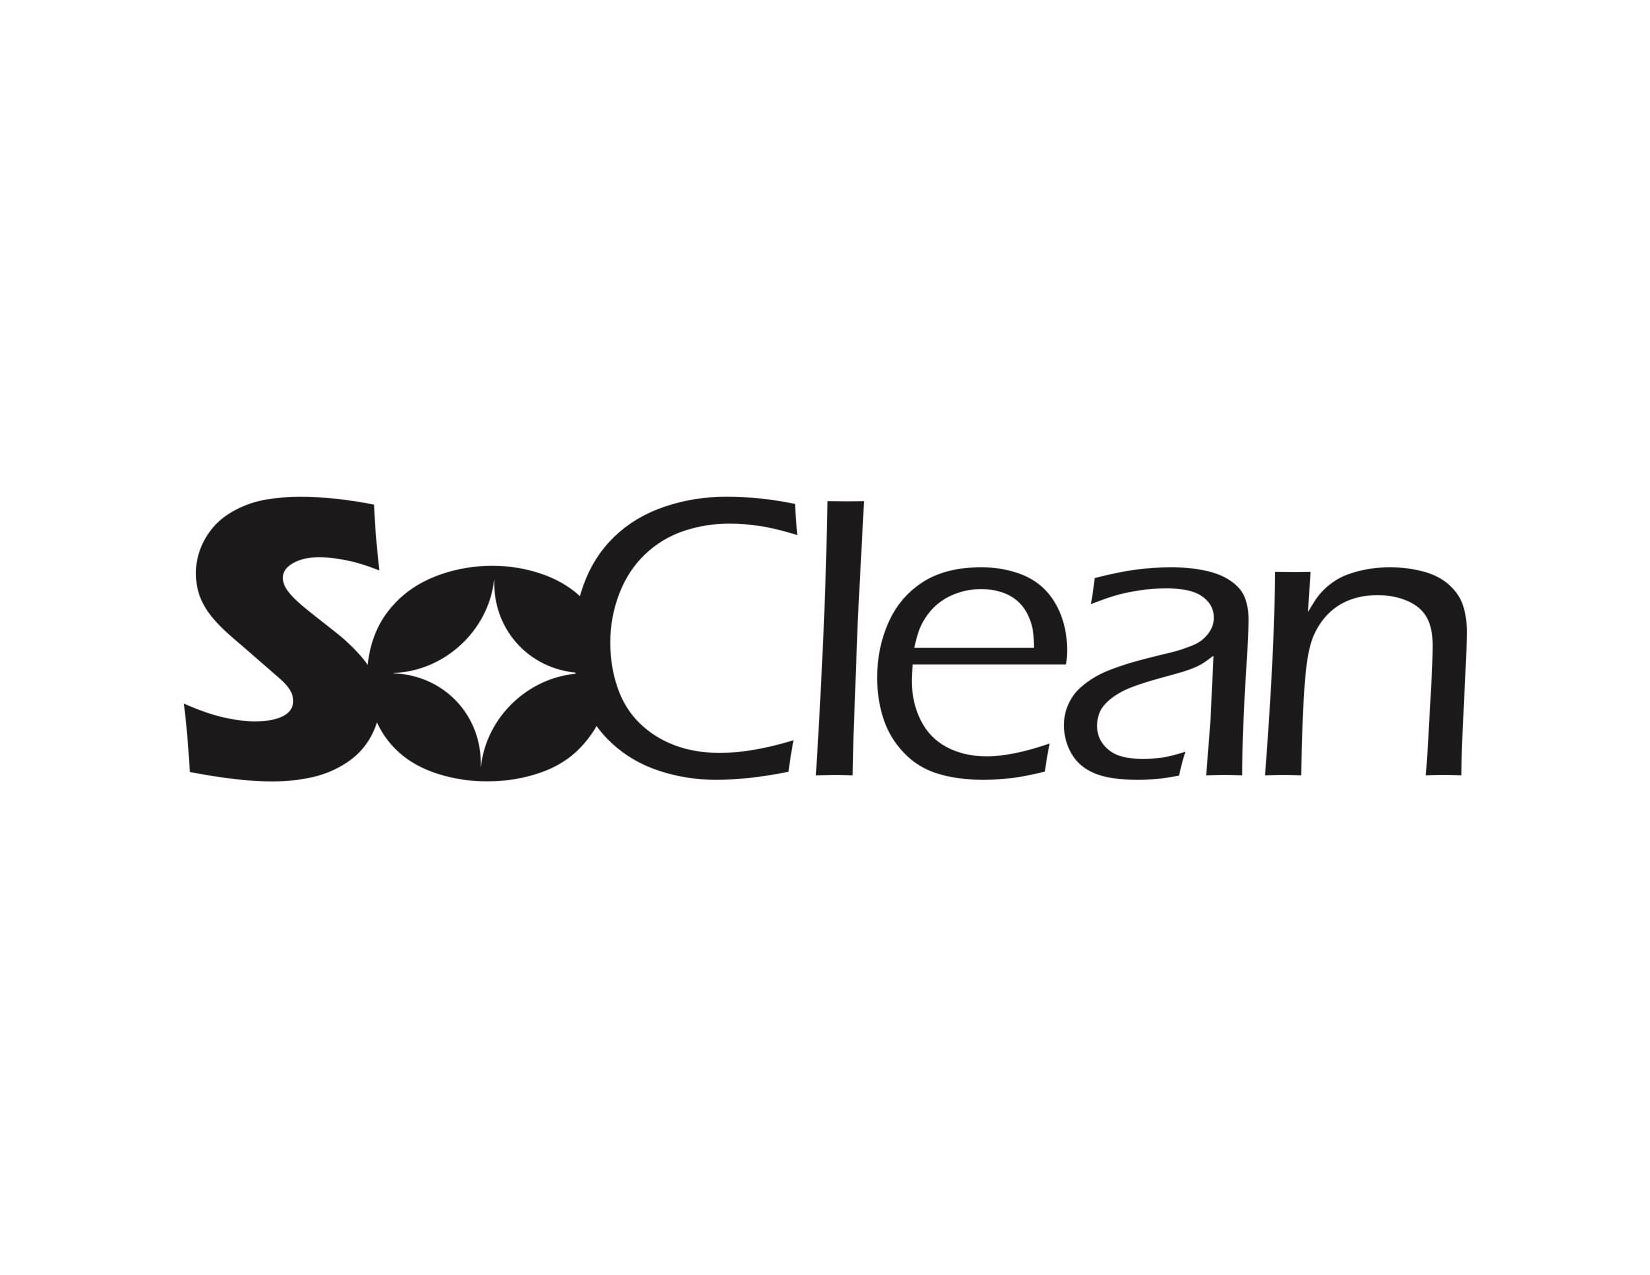 Trademark Logo SOCLEAN